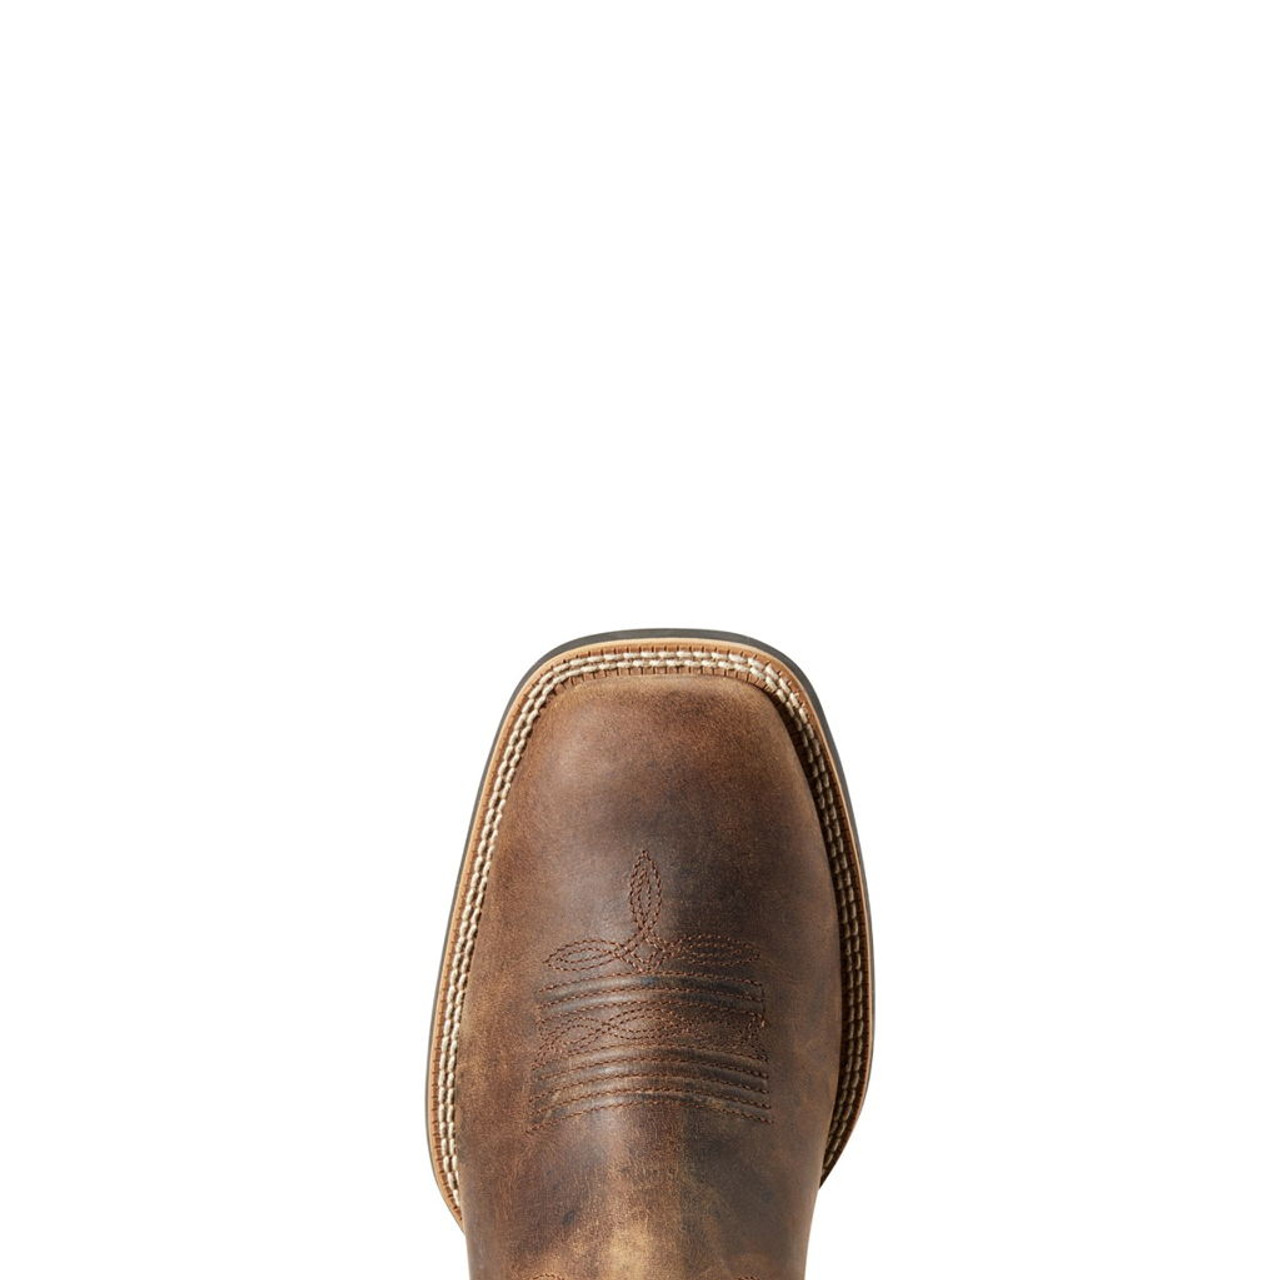 Ariat Men's Sport Square-Toe Western Boots, Black, 10